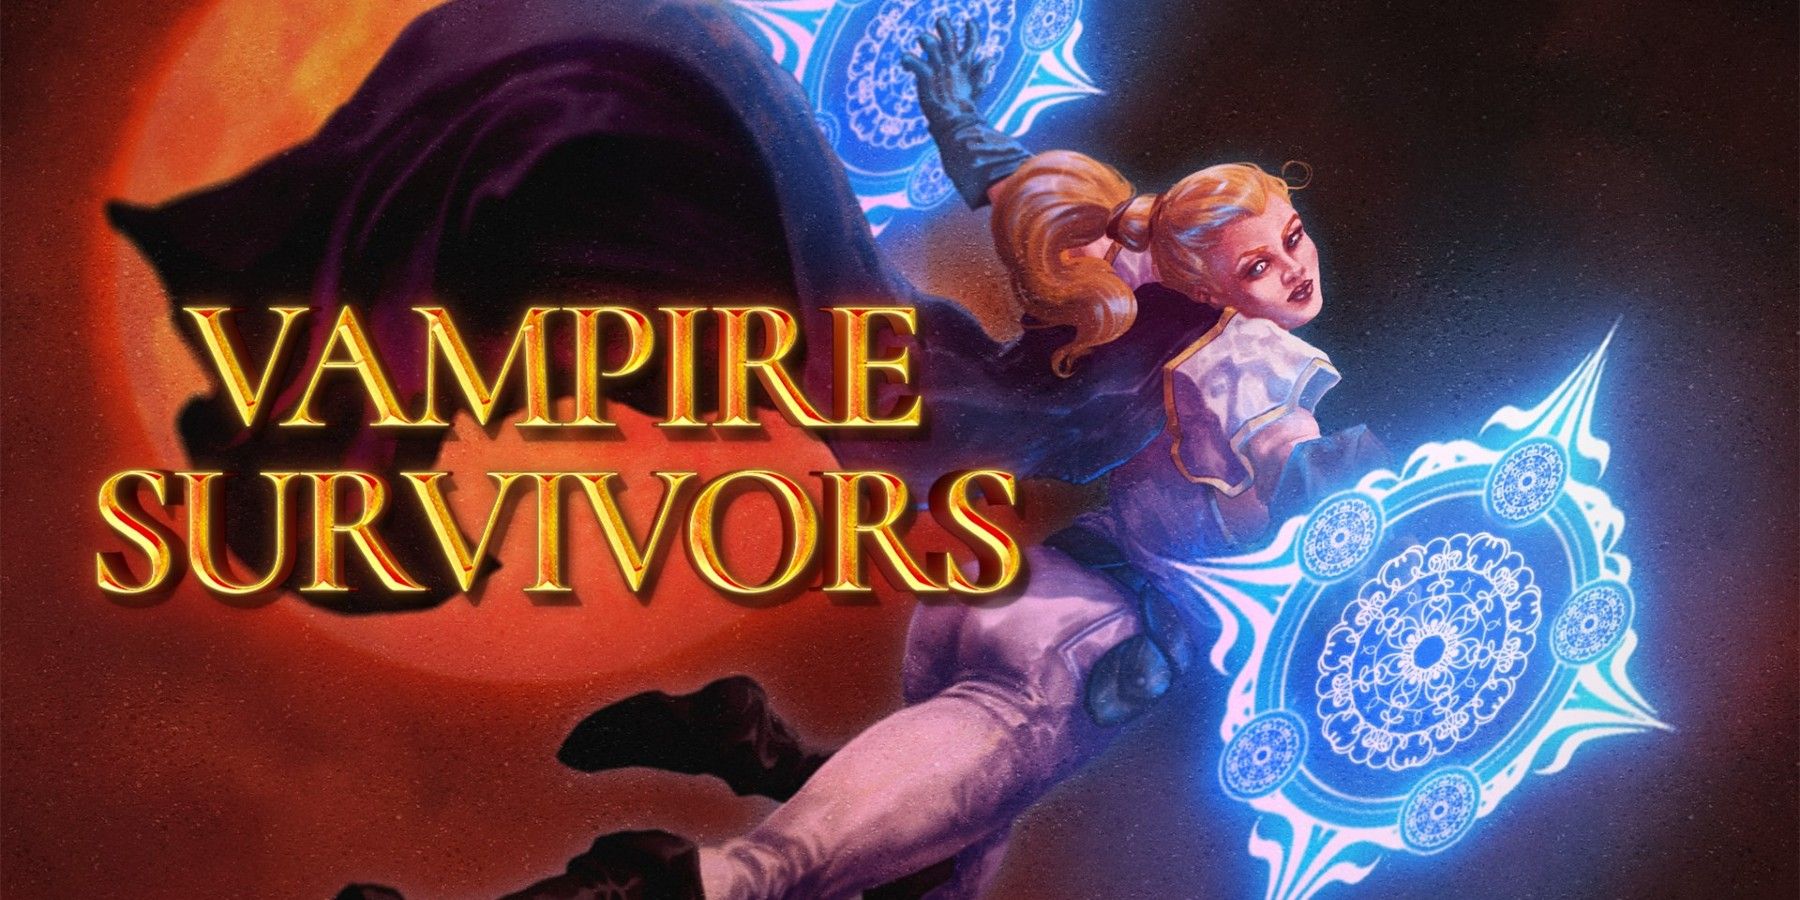 Vampire Survivors Update Adding New Inverse Game Mode